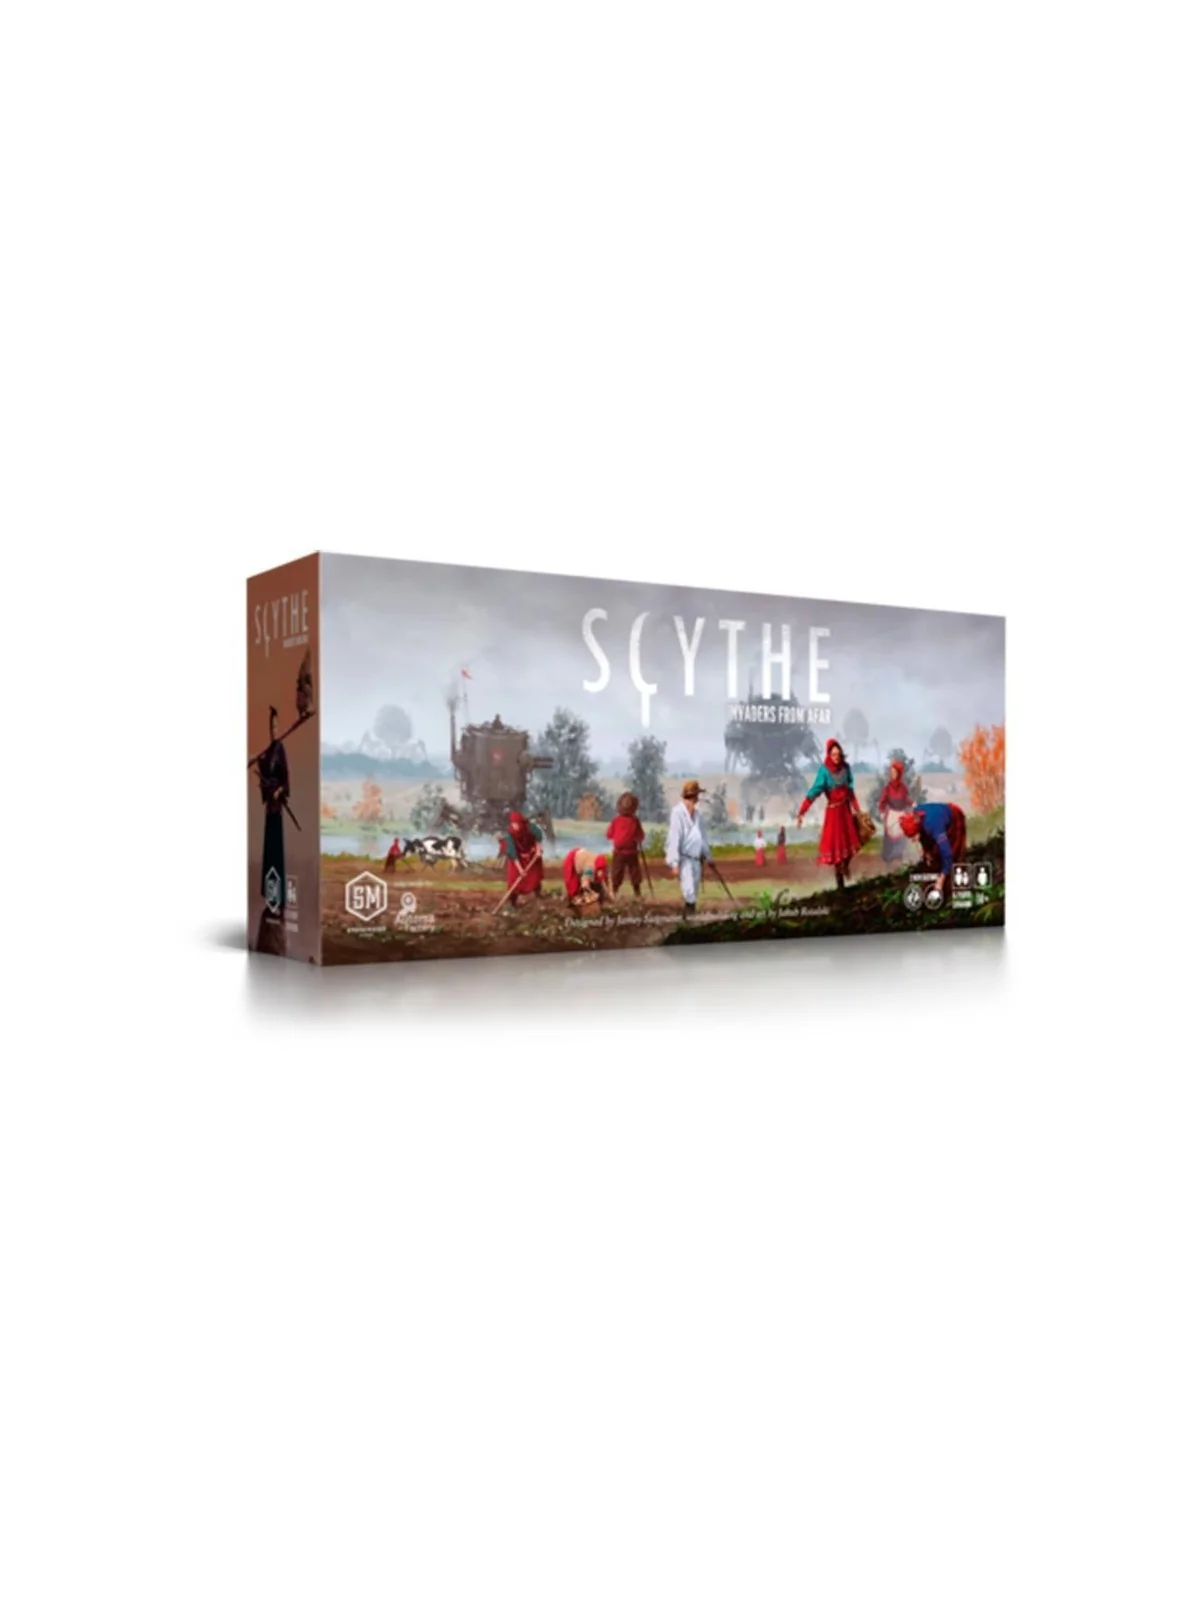 Comprar Scythe: Invaders From Afar (Inglés) barato al mejor precio 26,